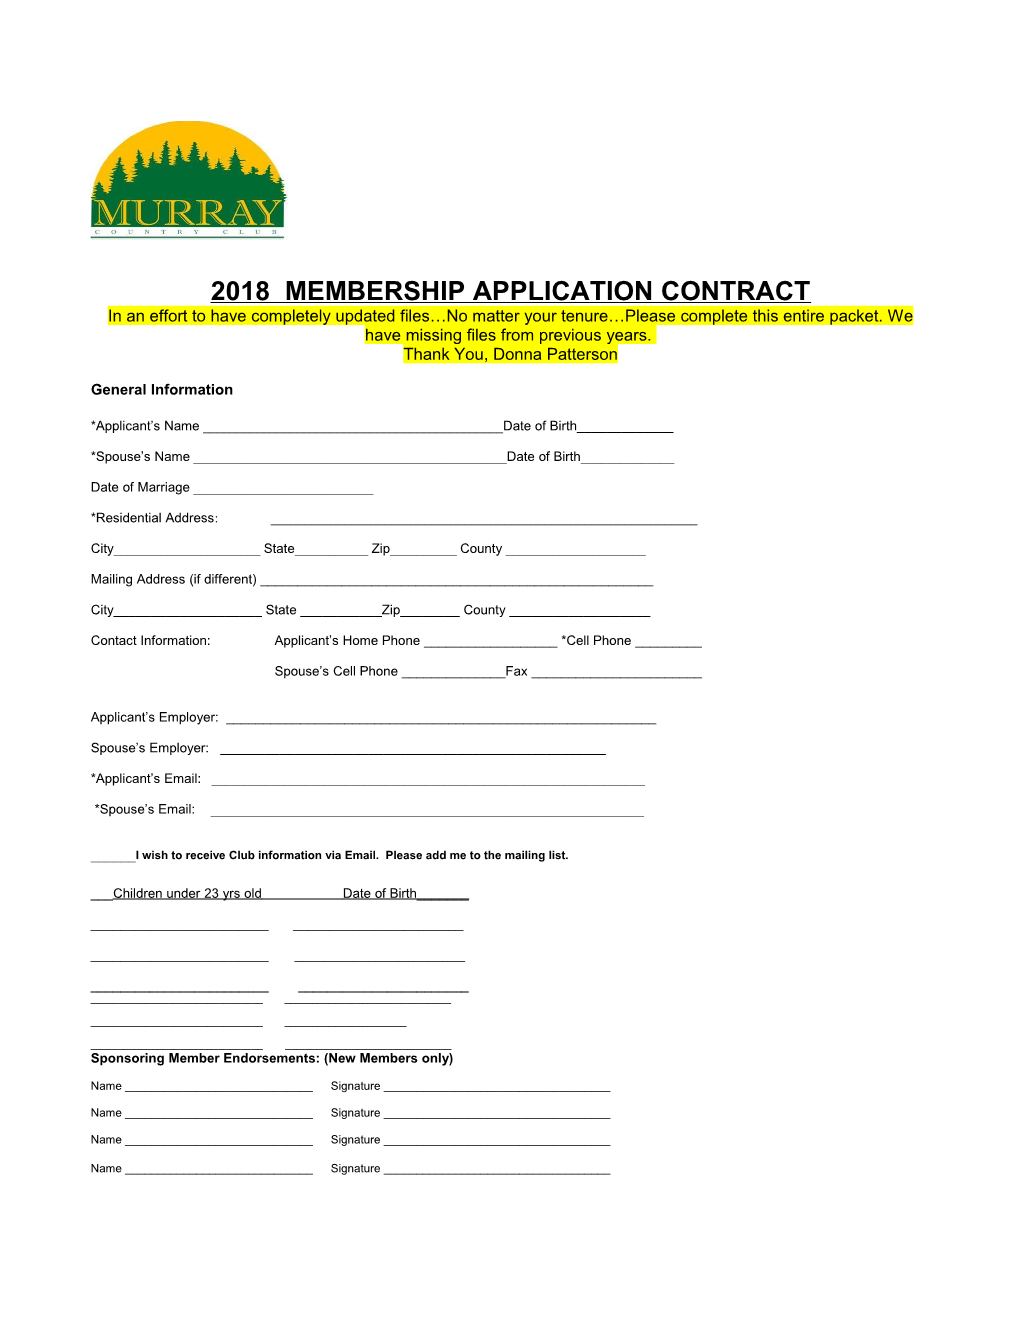 2018 Membership Application Contract